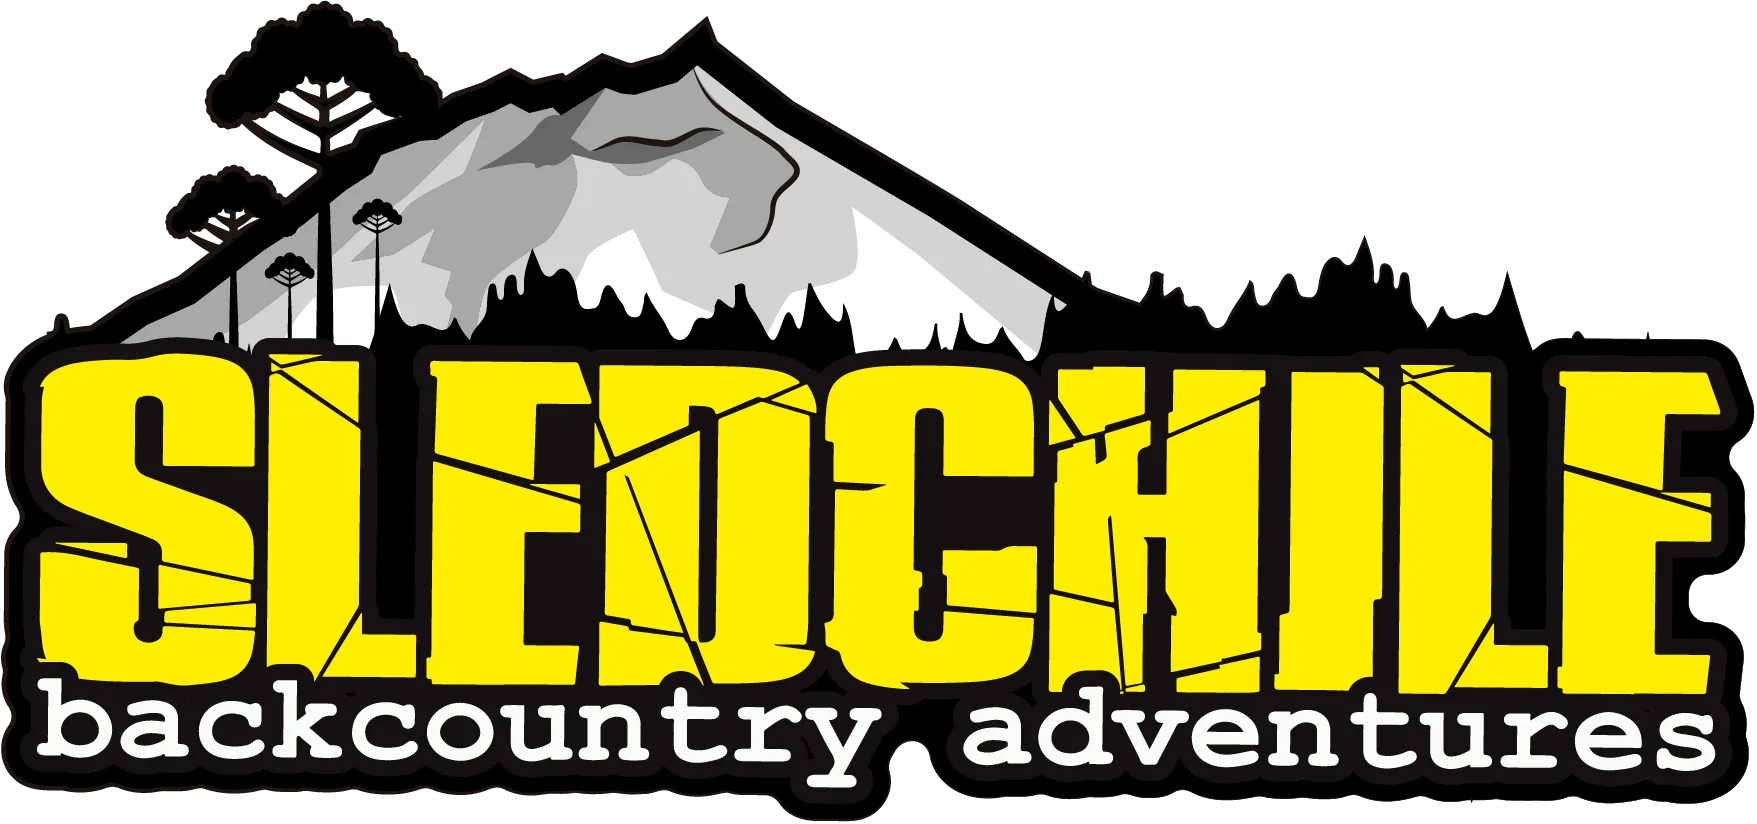 Sledchile Backcountry Adventures